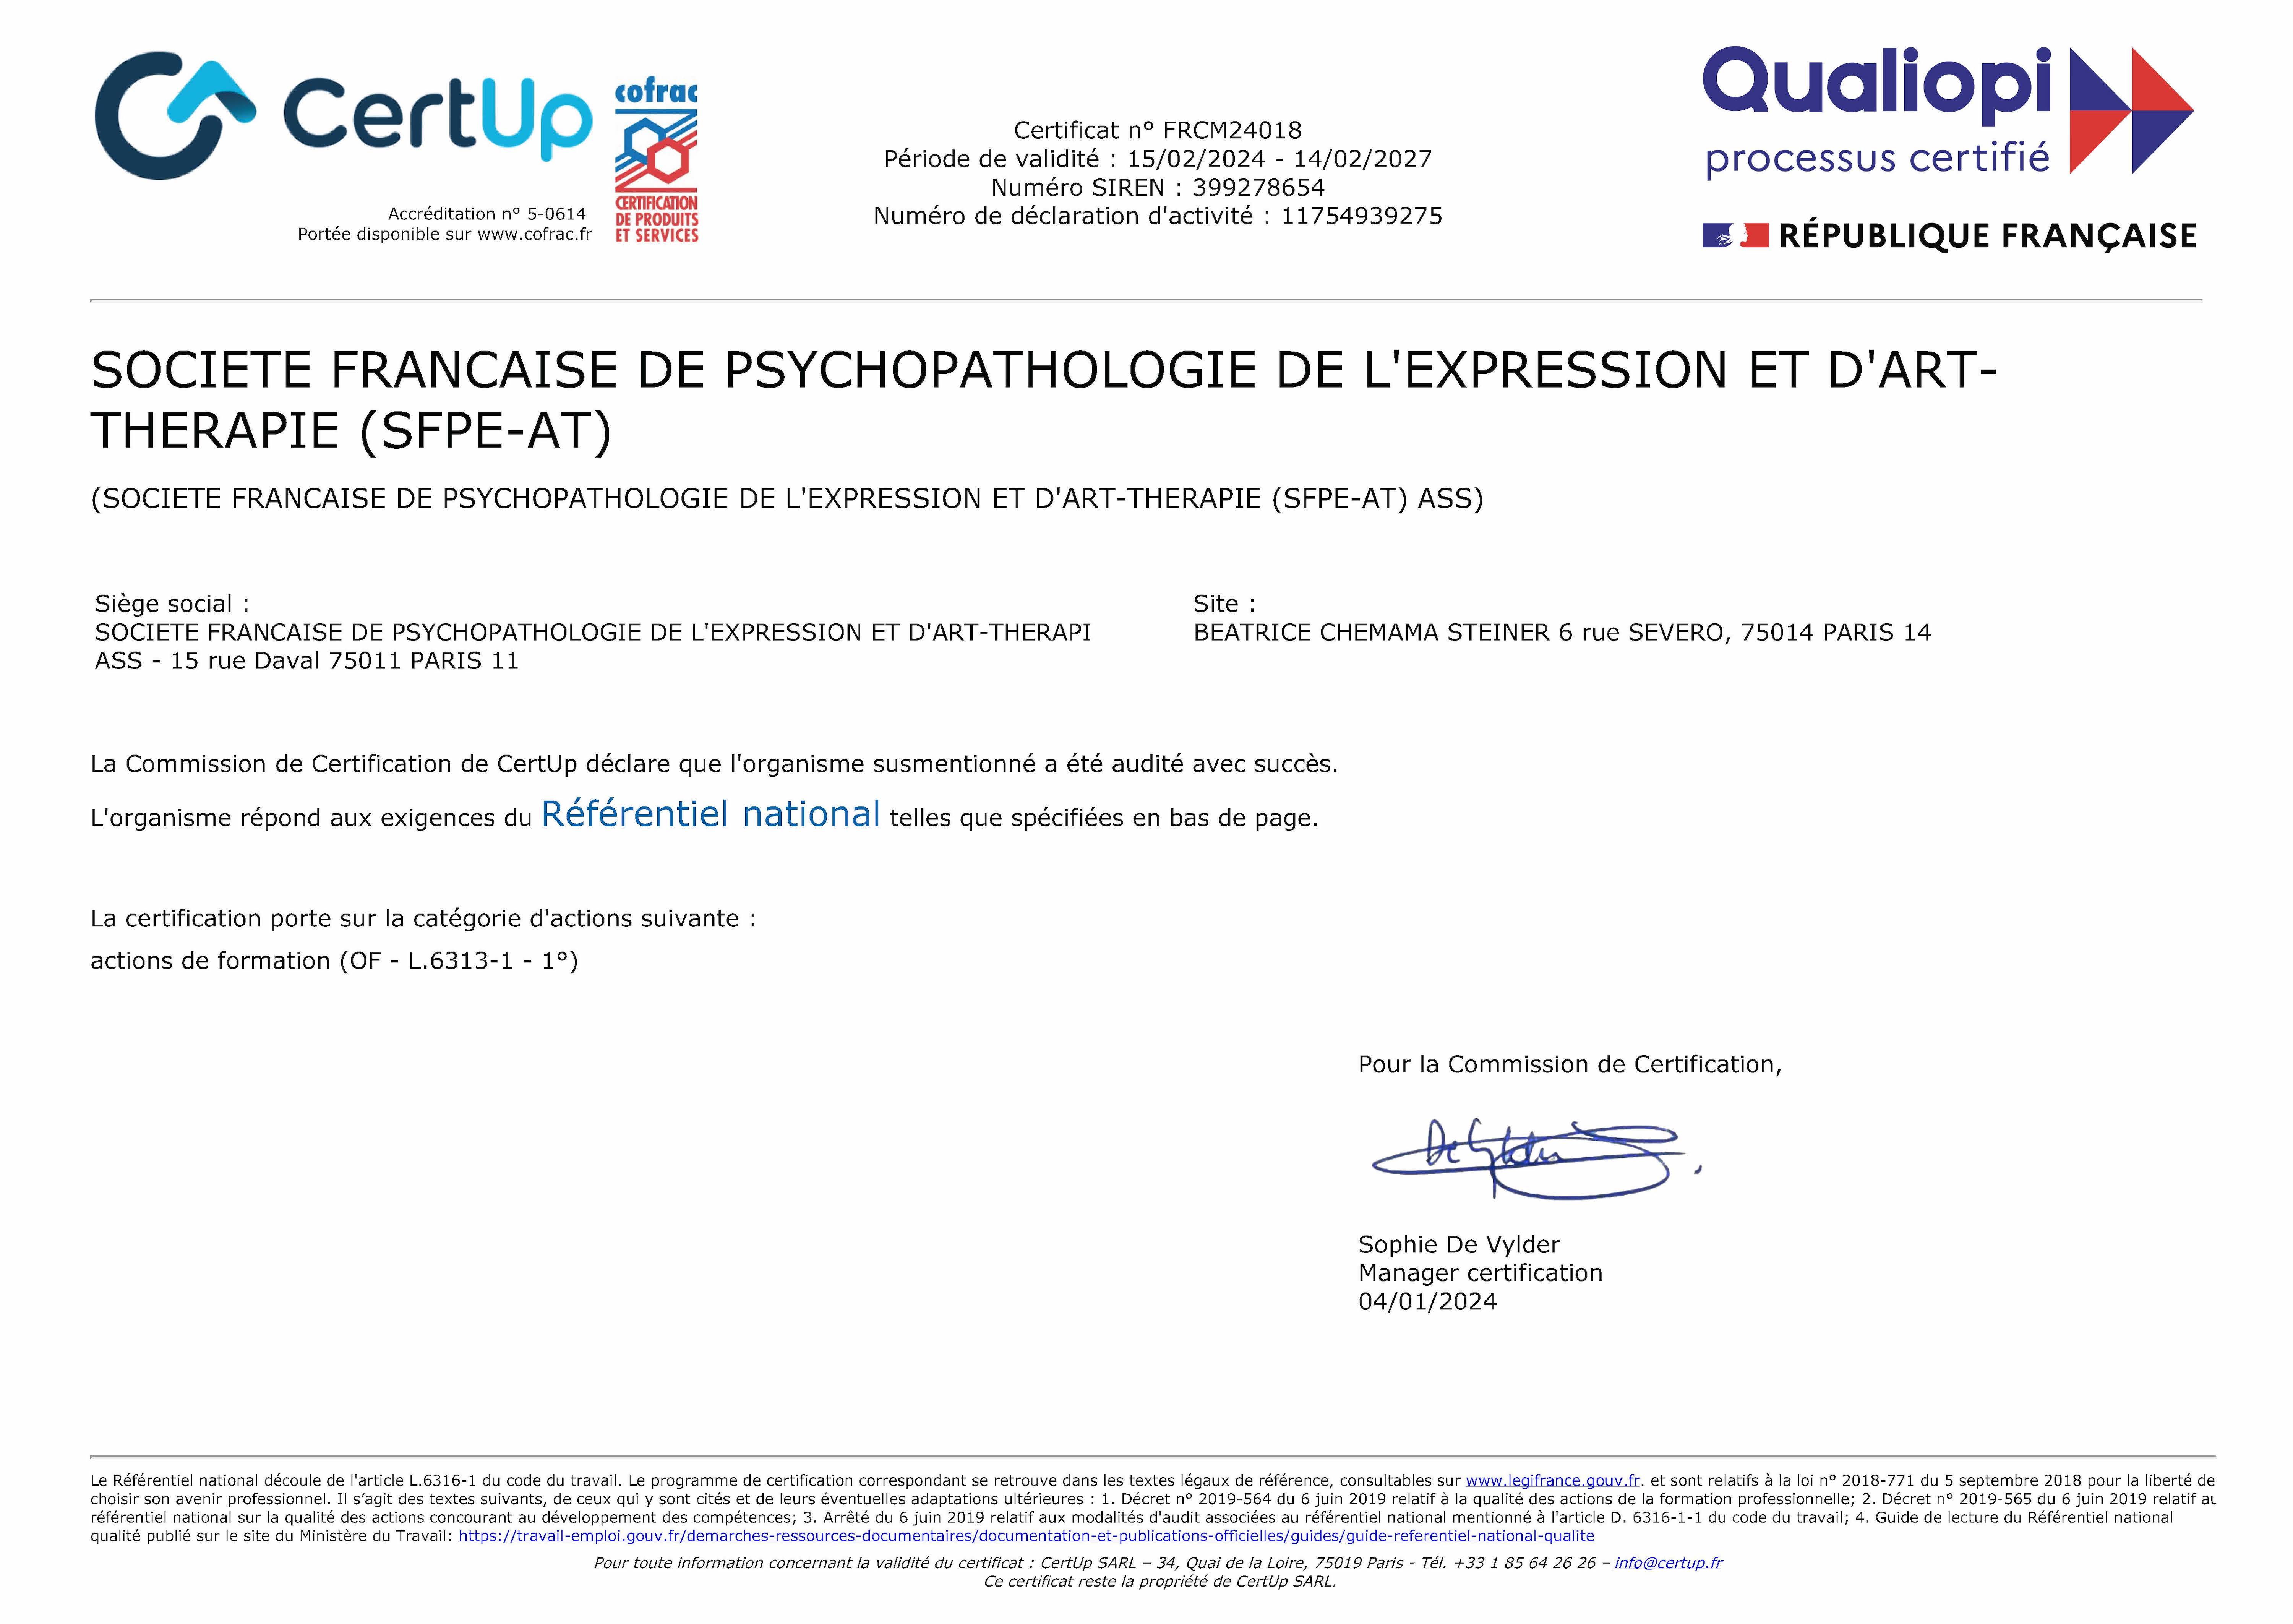 Certification Qualiopi de la SFPE-AT